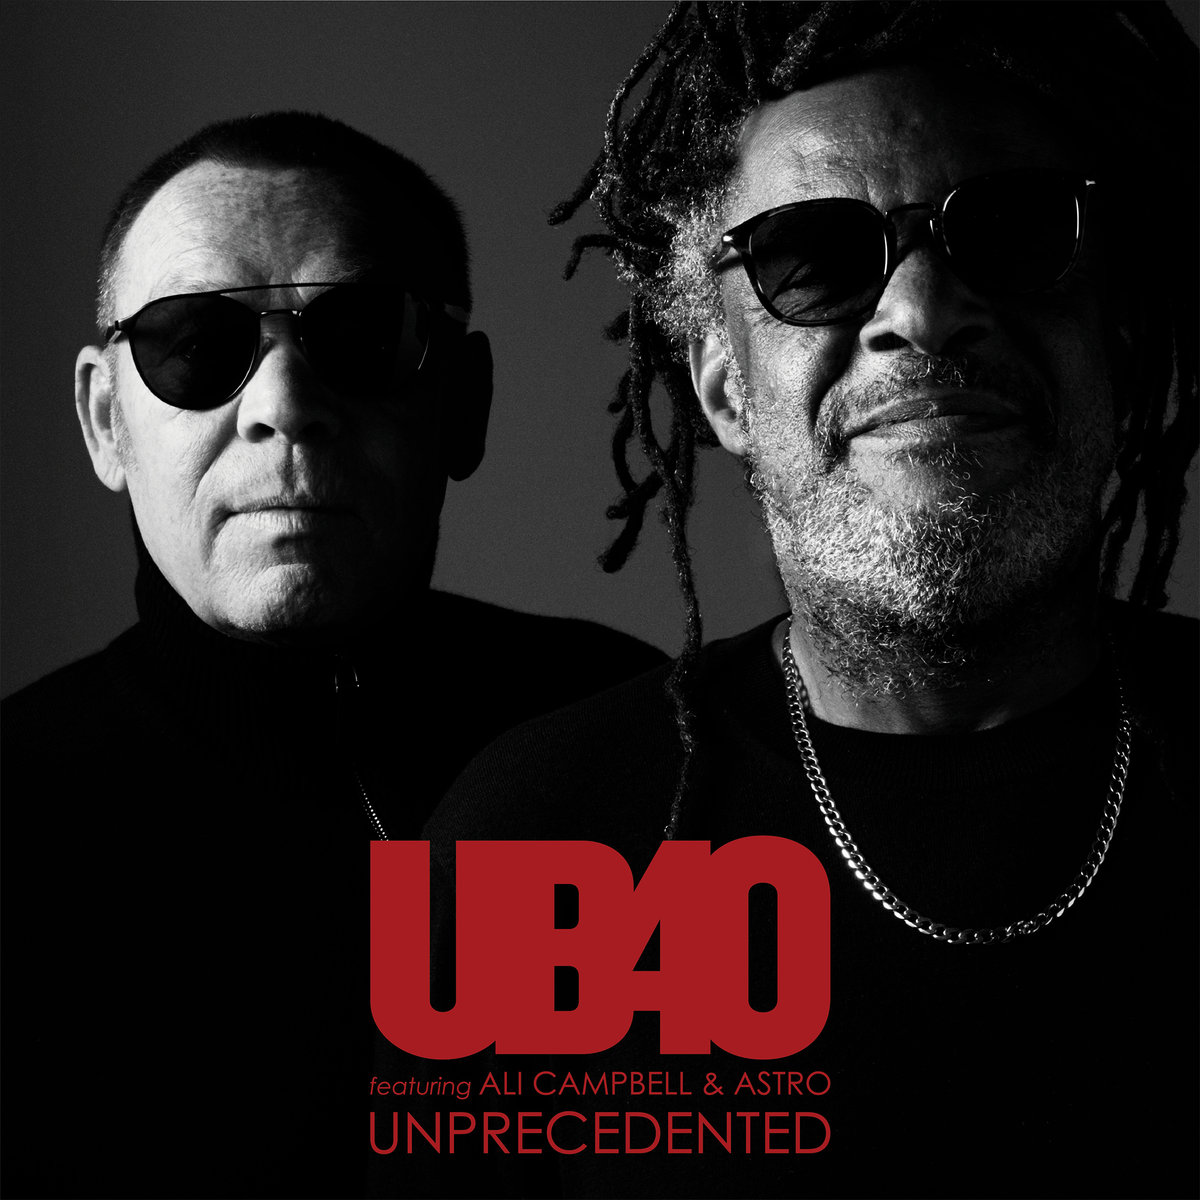 UB 40 Feat. ALI CAMPBELL & ASTRO – Unprecedented